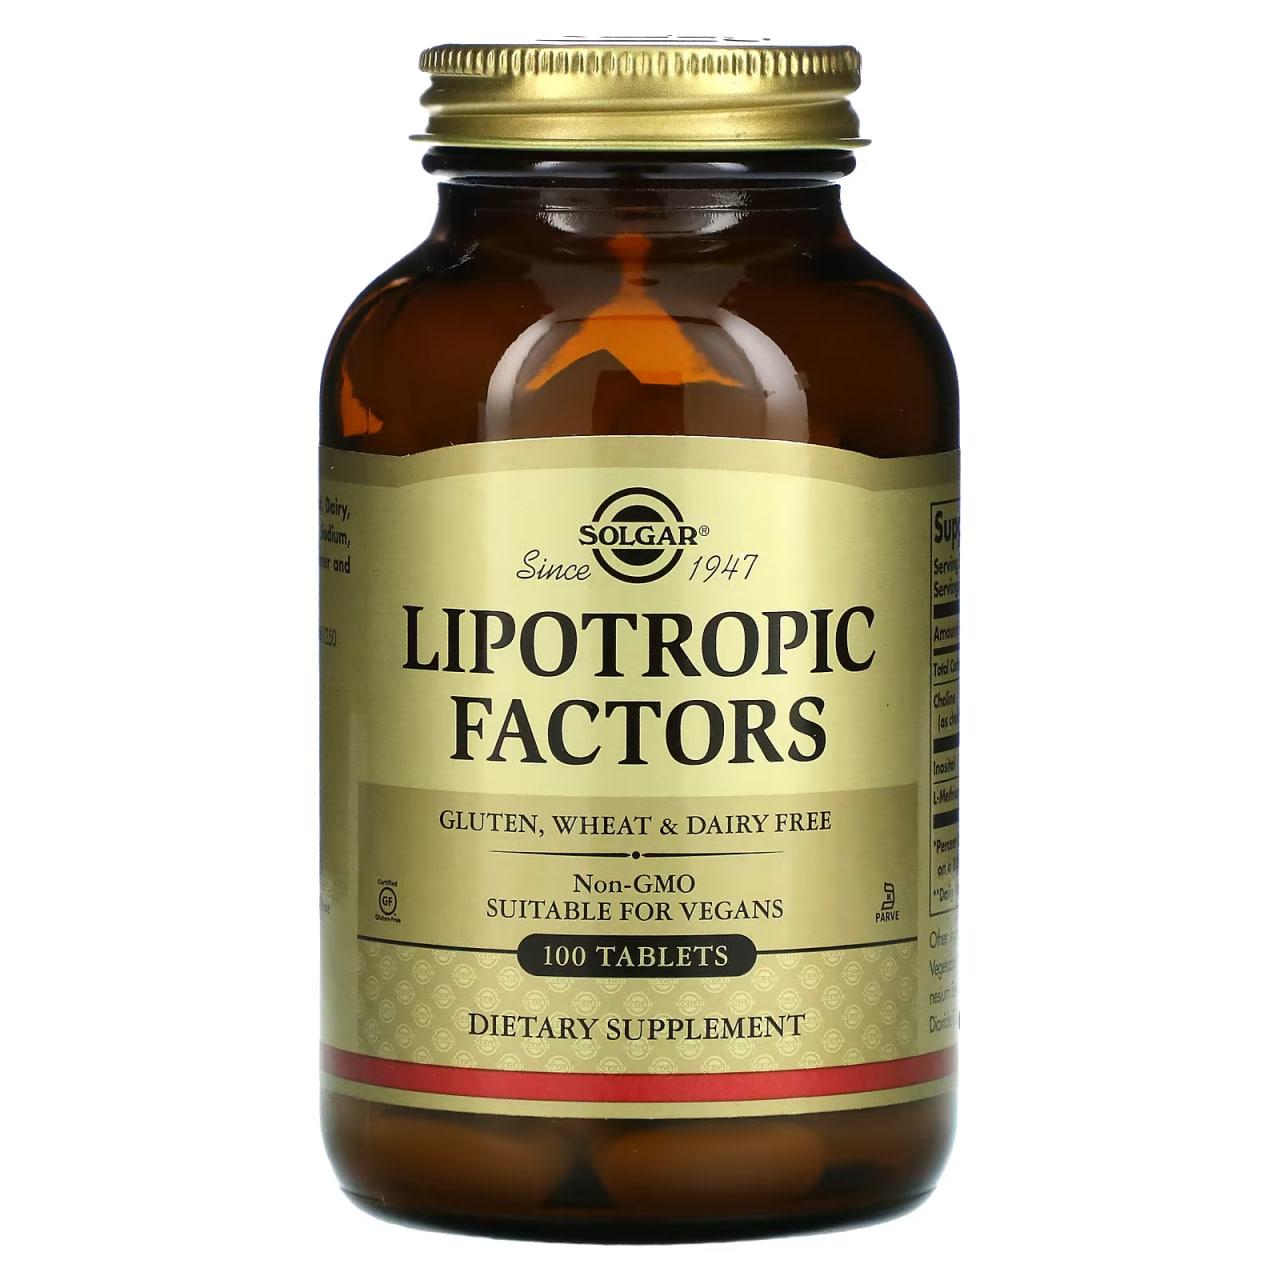 Lipotropic Factors Solgar 100 tabs,  мл, Solgar. Спец препараты. 